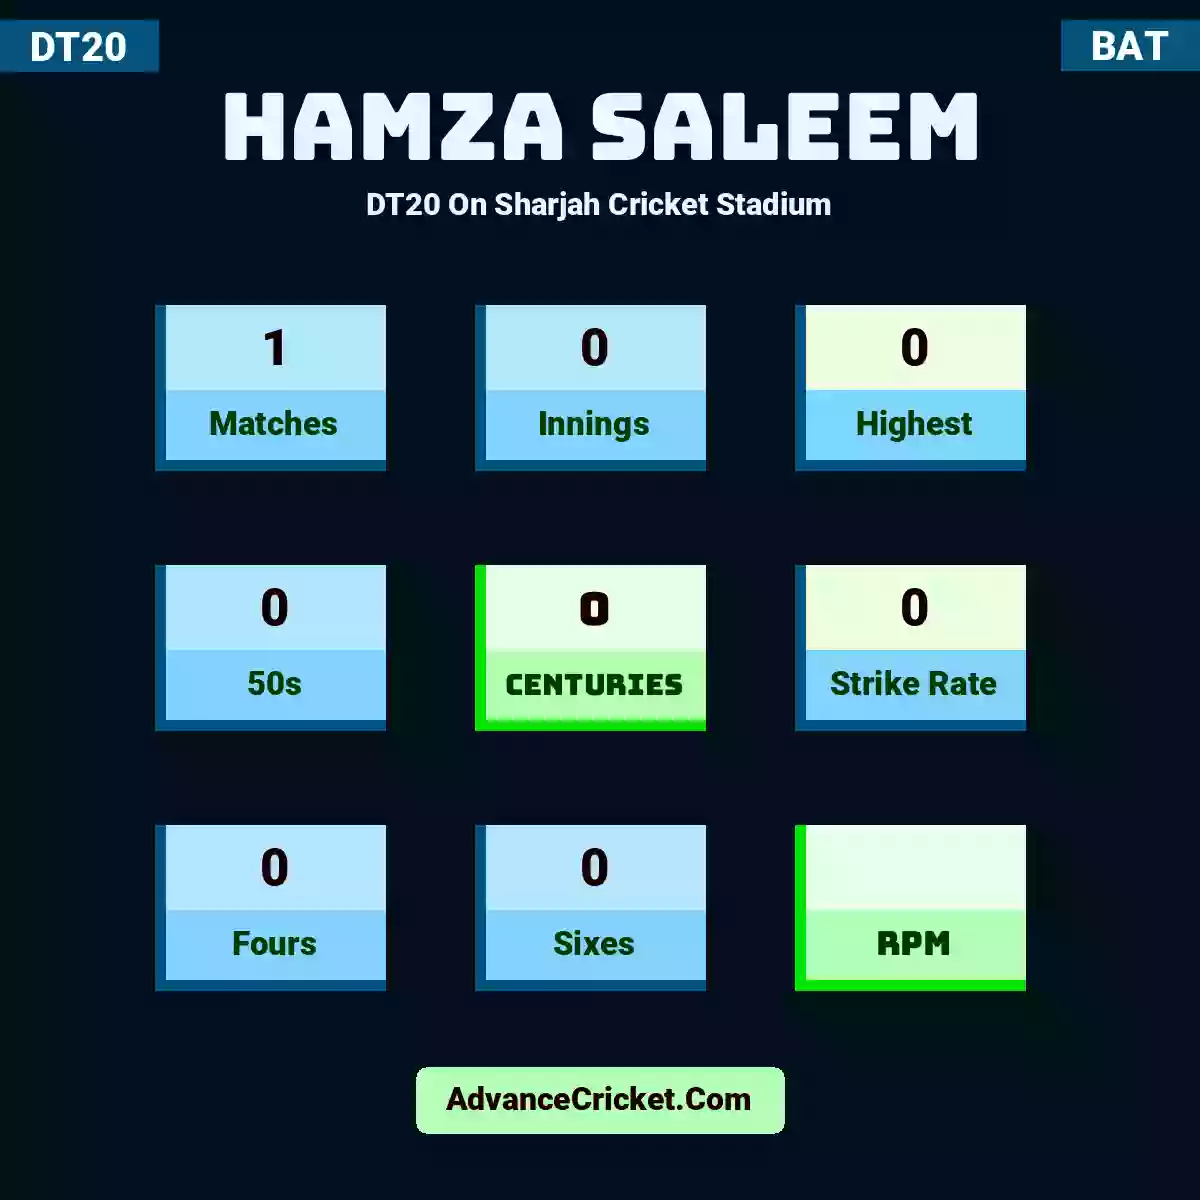 Hamza Saleem DT20  On Sharjah Cricket Stadium, Hamza Saleem played 1 matches, scored 0 runs as highest, 0 half-centuries, and 0 centuries, with a strike rate of 0. H.Saleem hit 0 fours and 0 sixes.